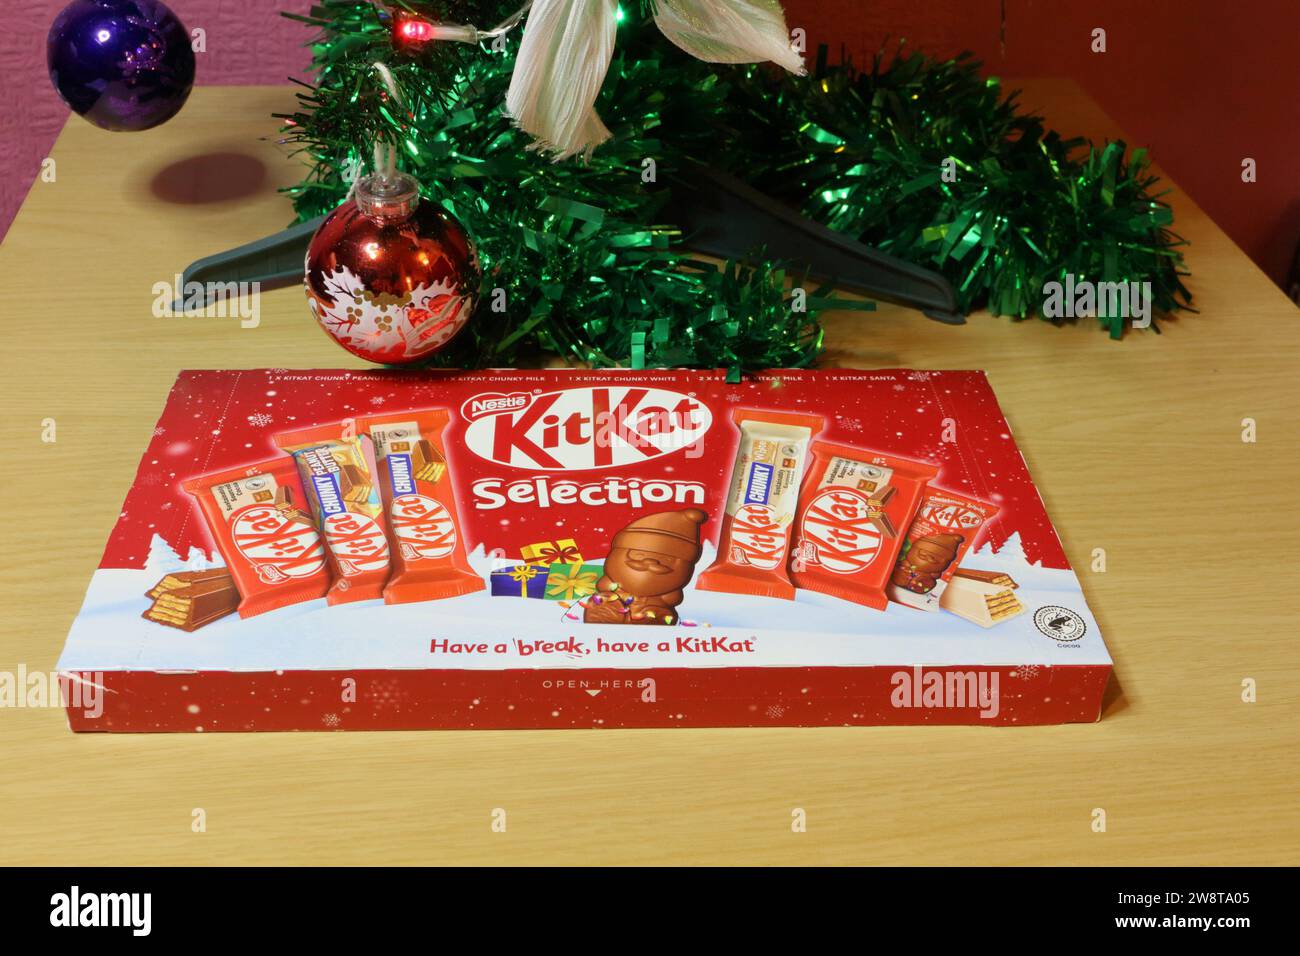 KitKat Christmas selection box of chocolate bars festive season candy bars Stock Photo